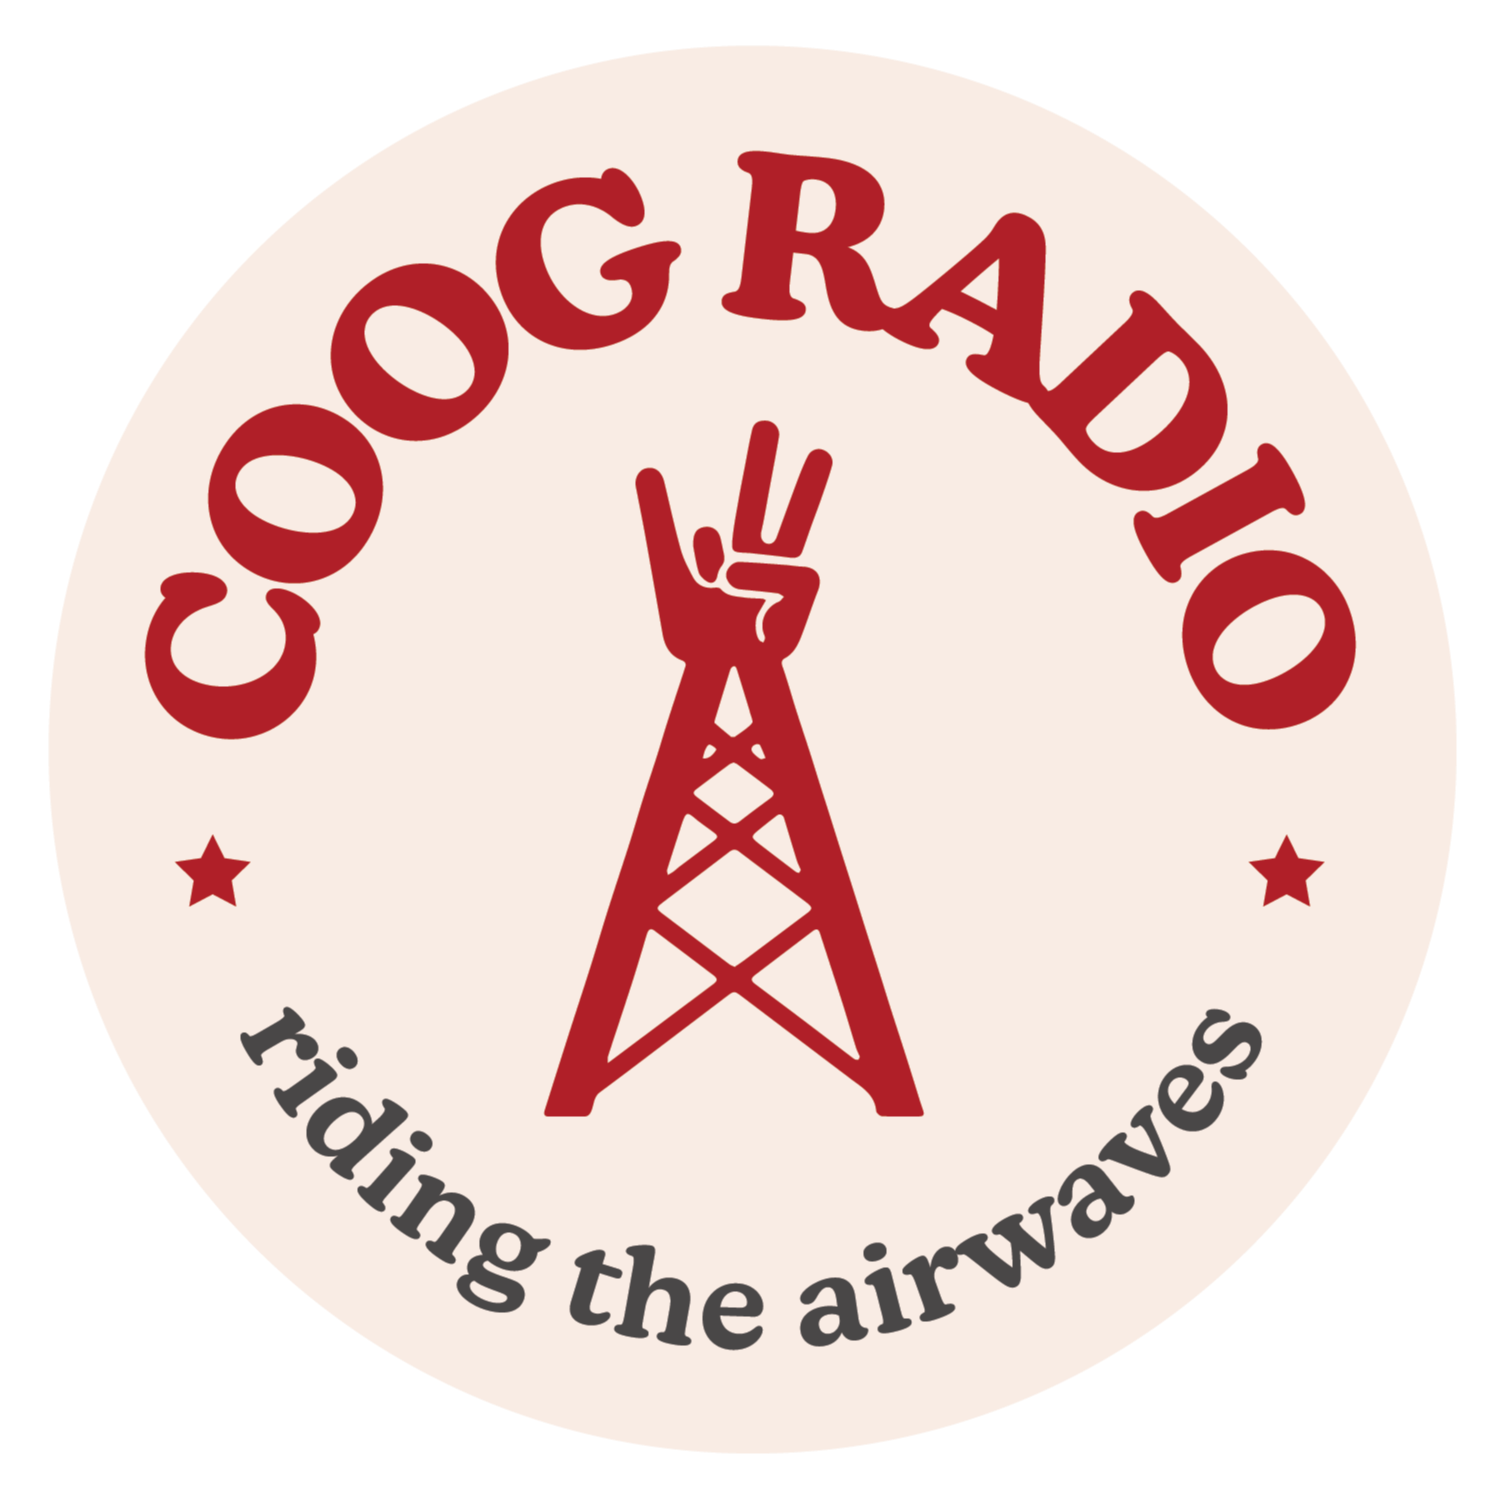 Coog Radio at the University of Houston